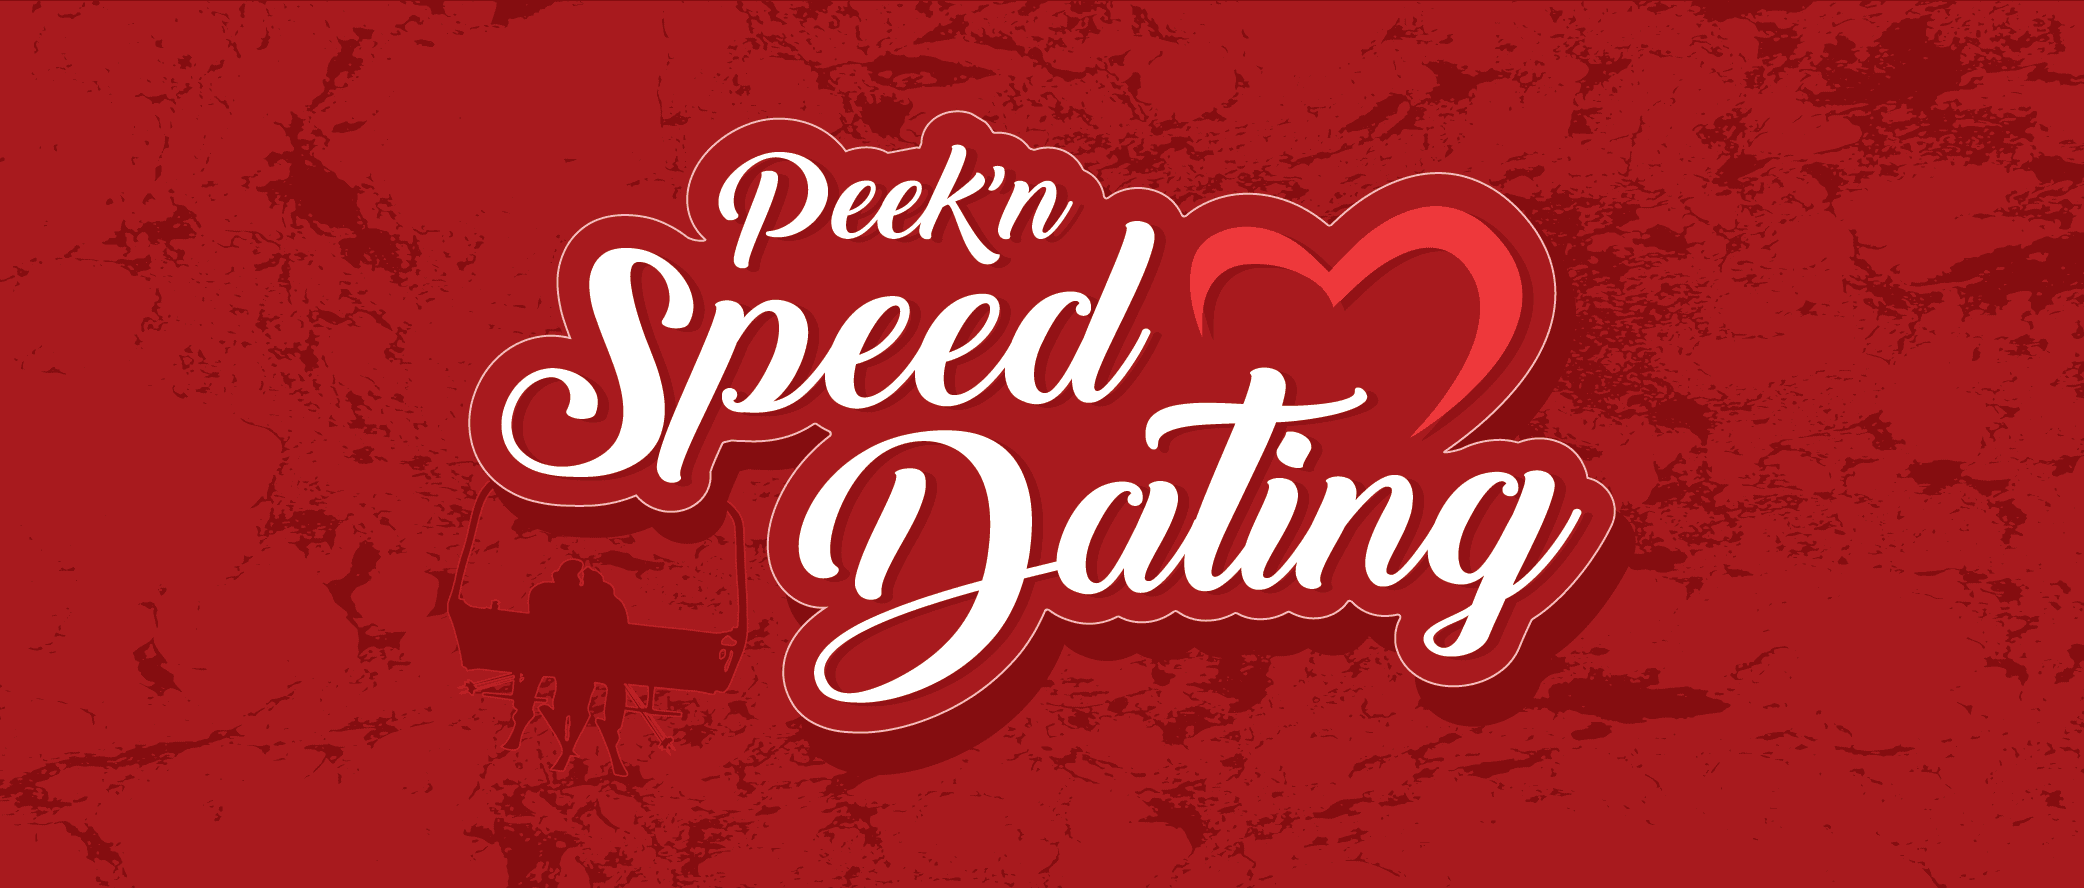 Peek'n Speed Dating event logo